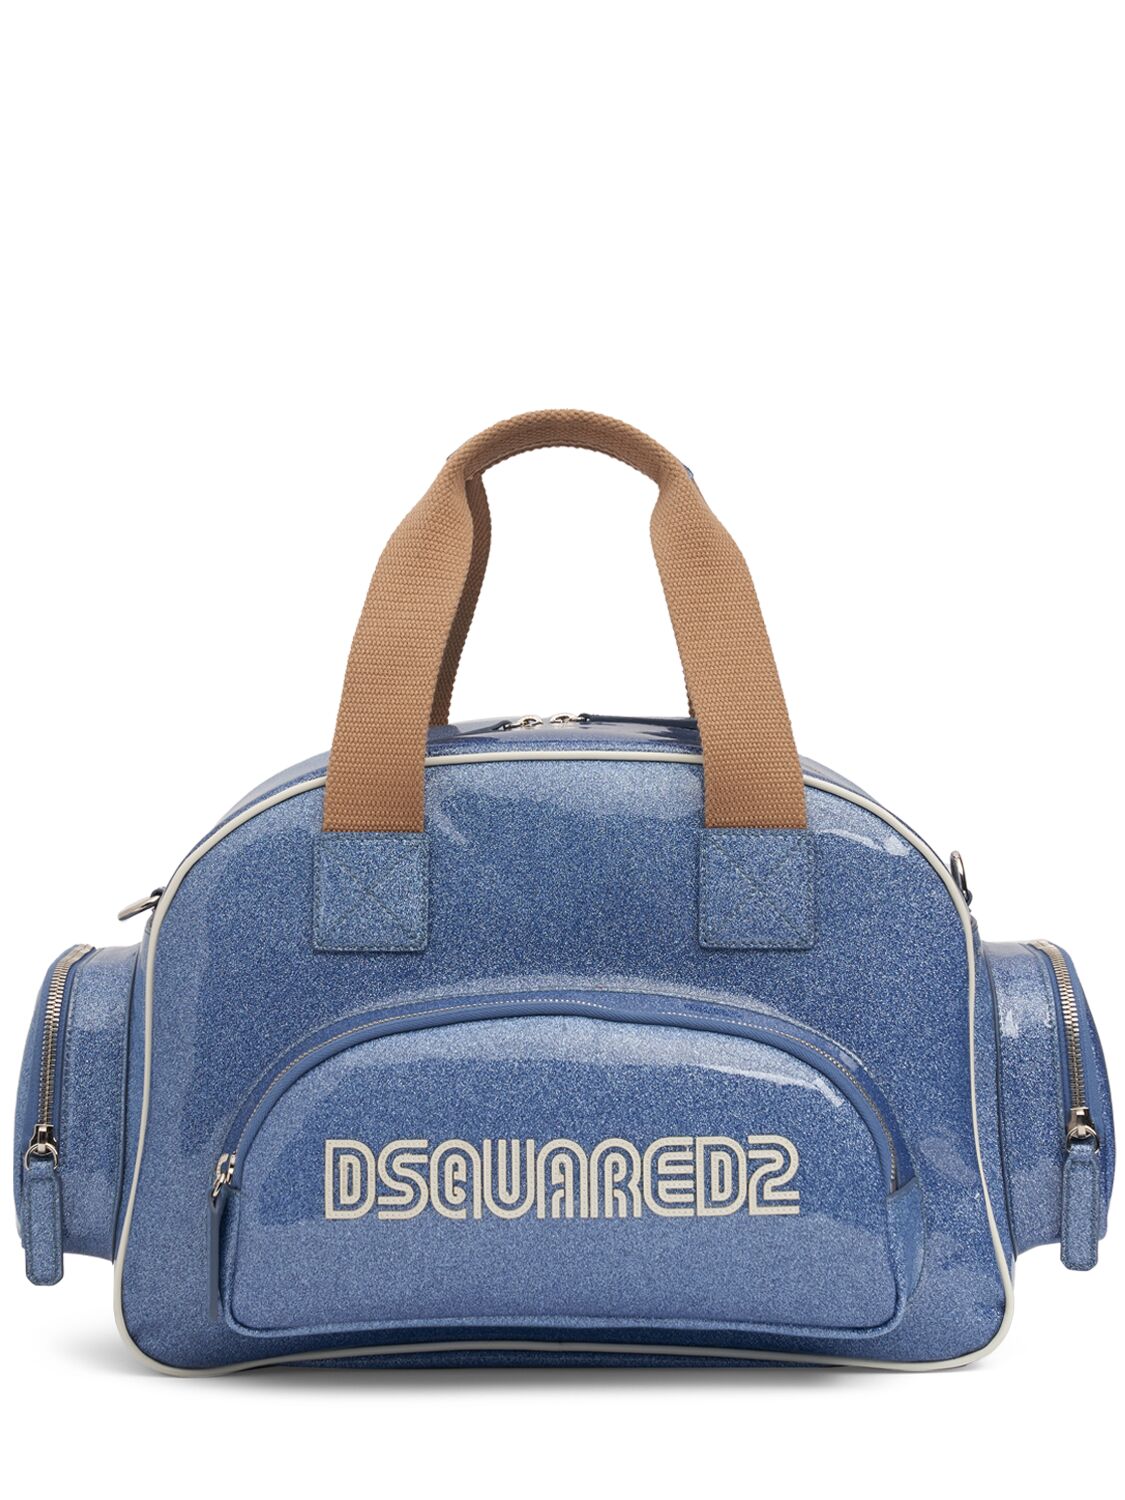 Dsquared2 Logo Duffle Bag In Light Blue